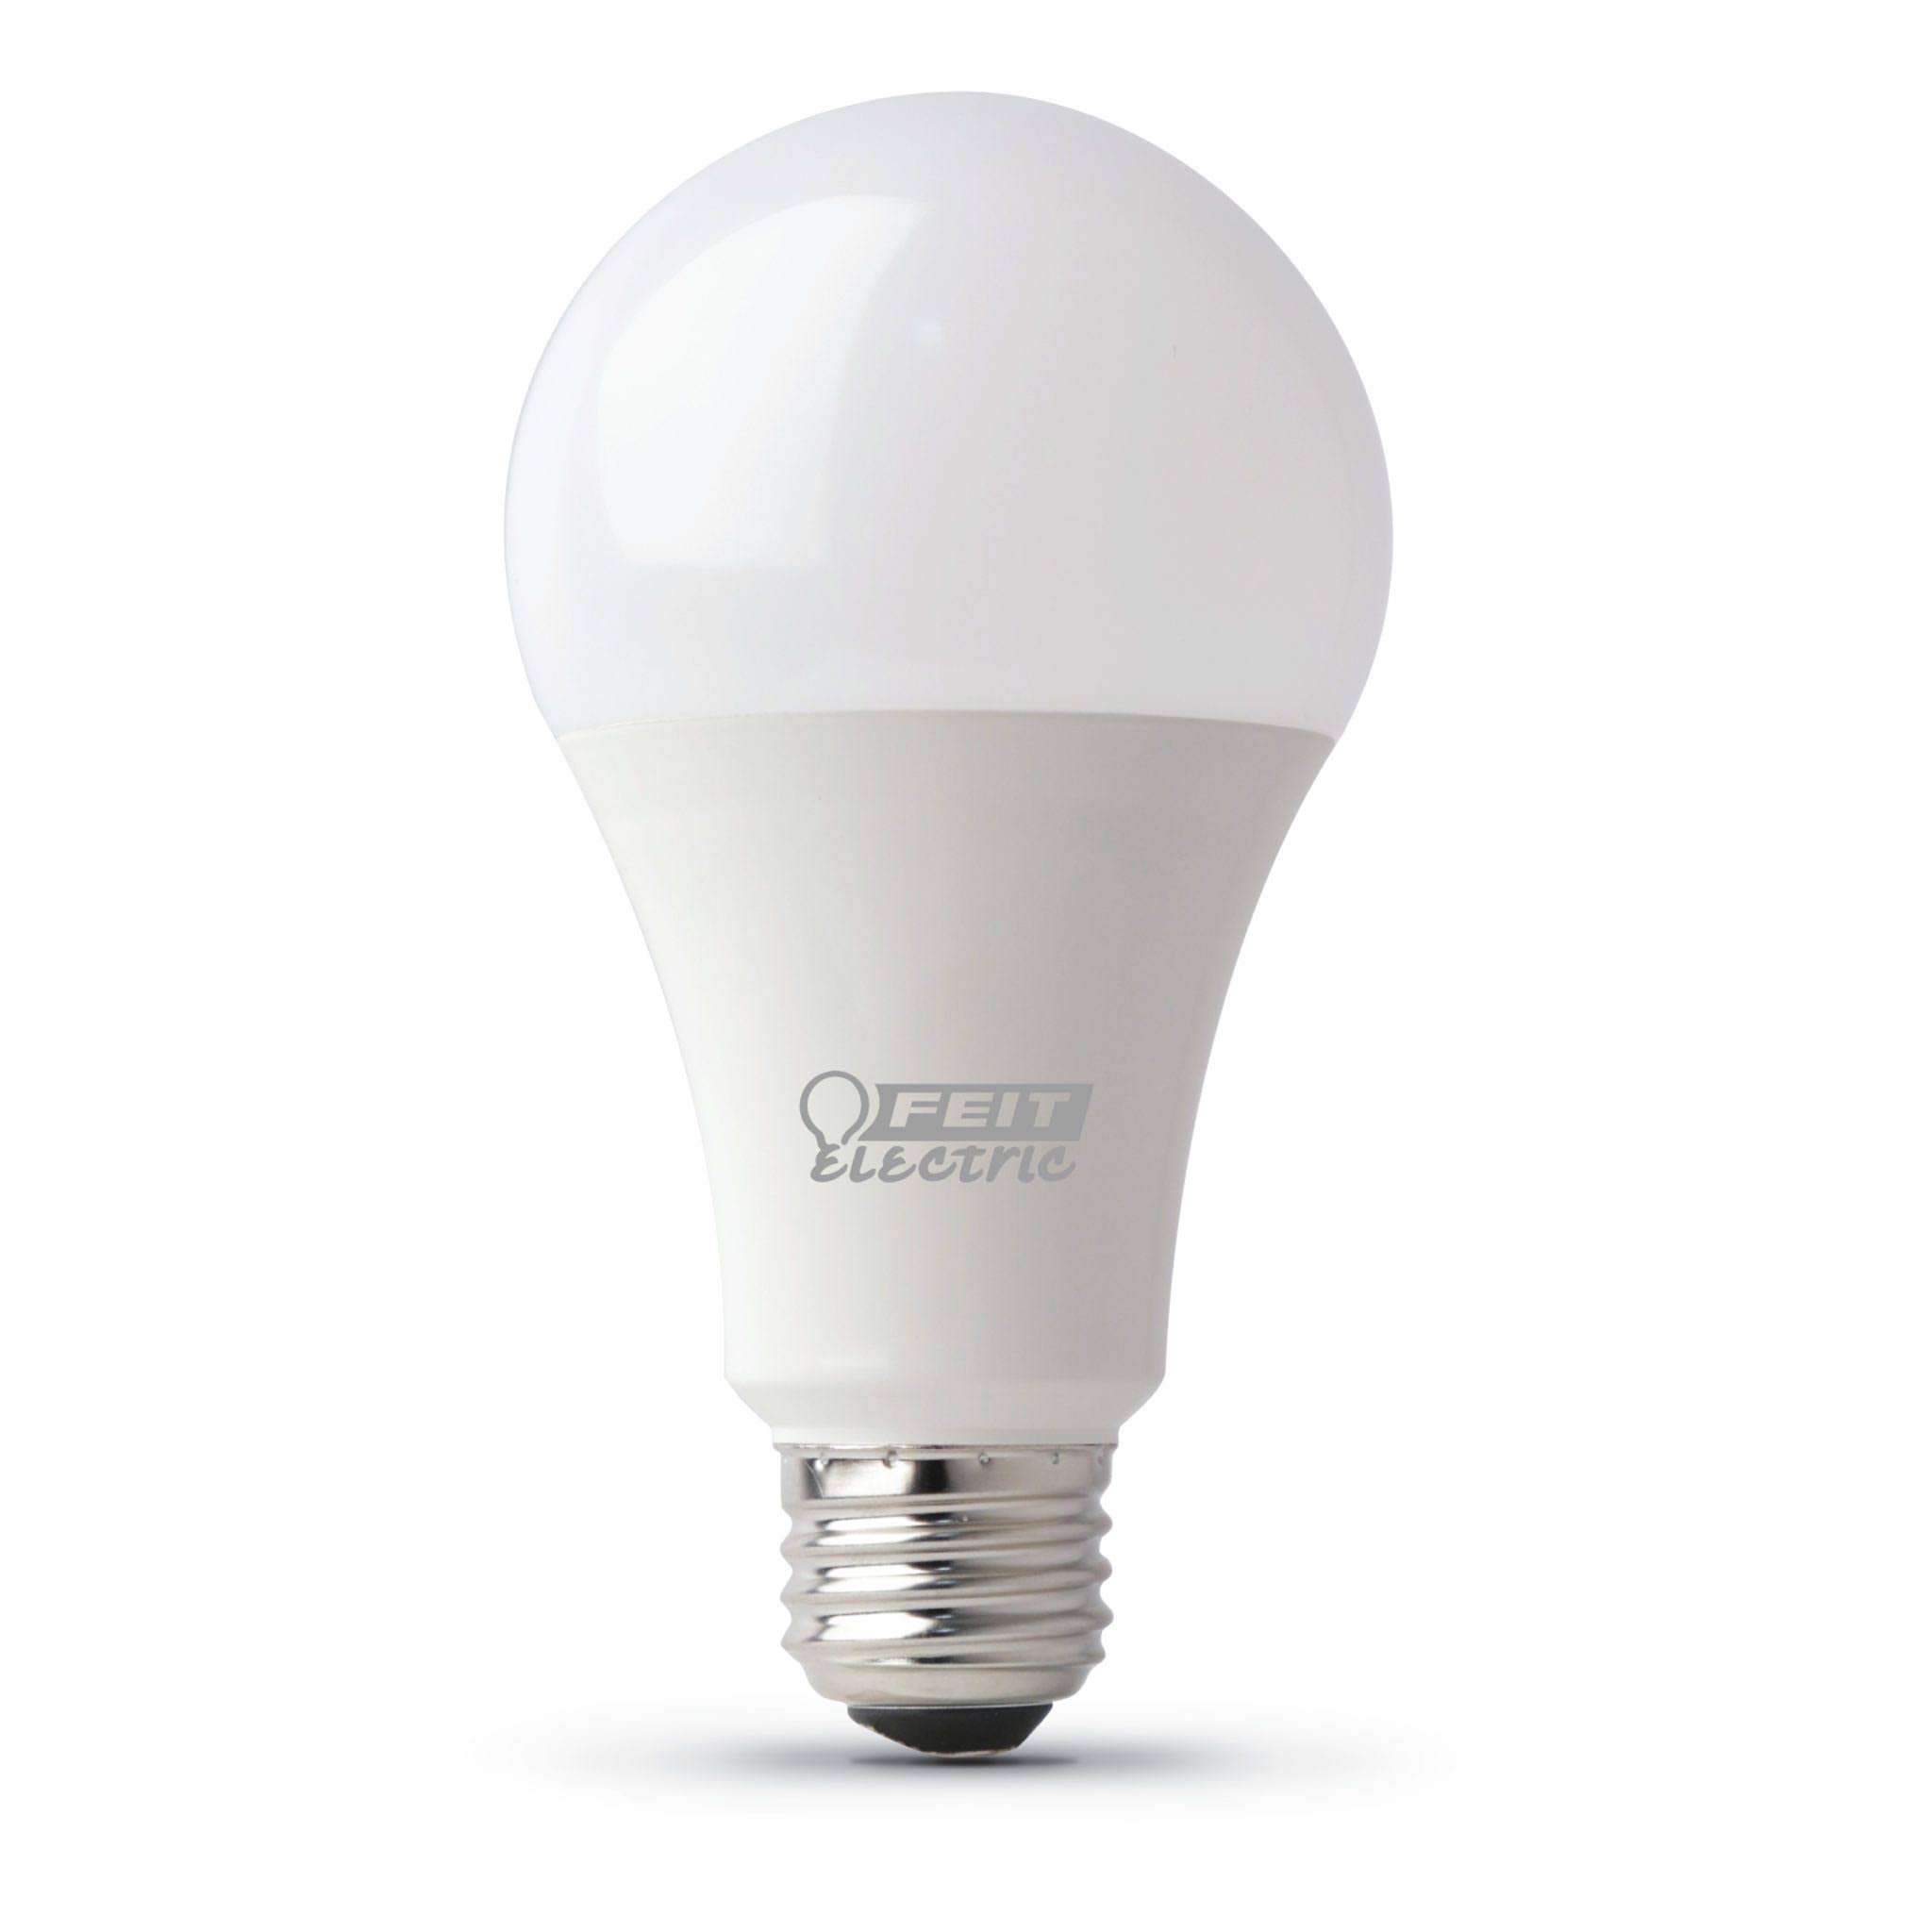 Feit Electric Enhance Light Bulbs, LED, Replacement, Daylight, 100 Watts - 2 bulbs